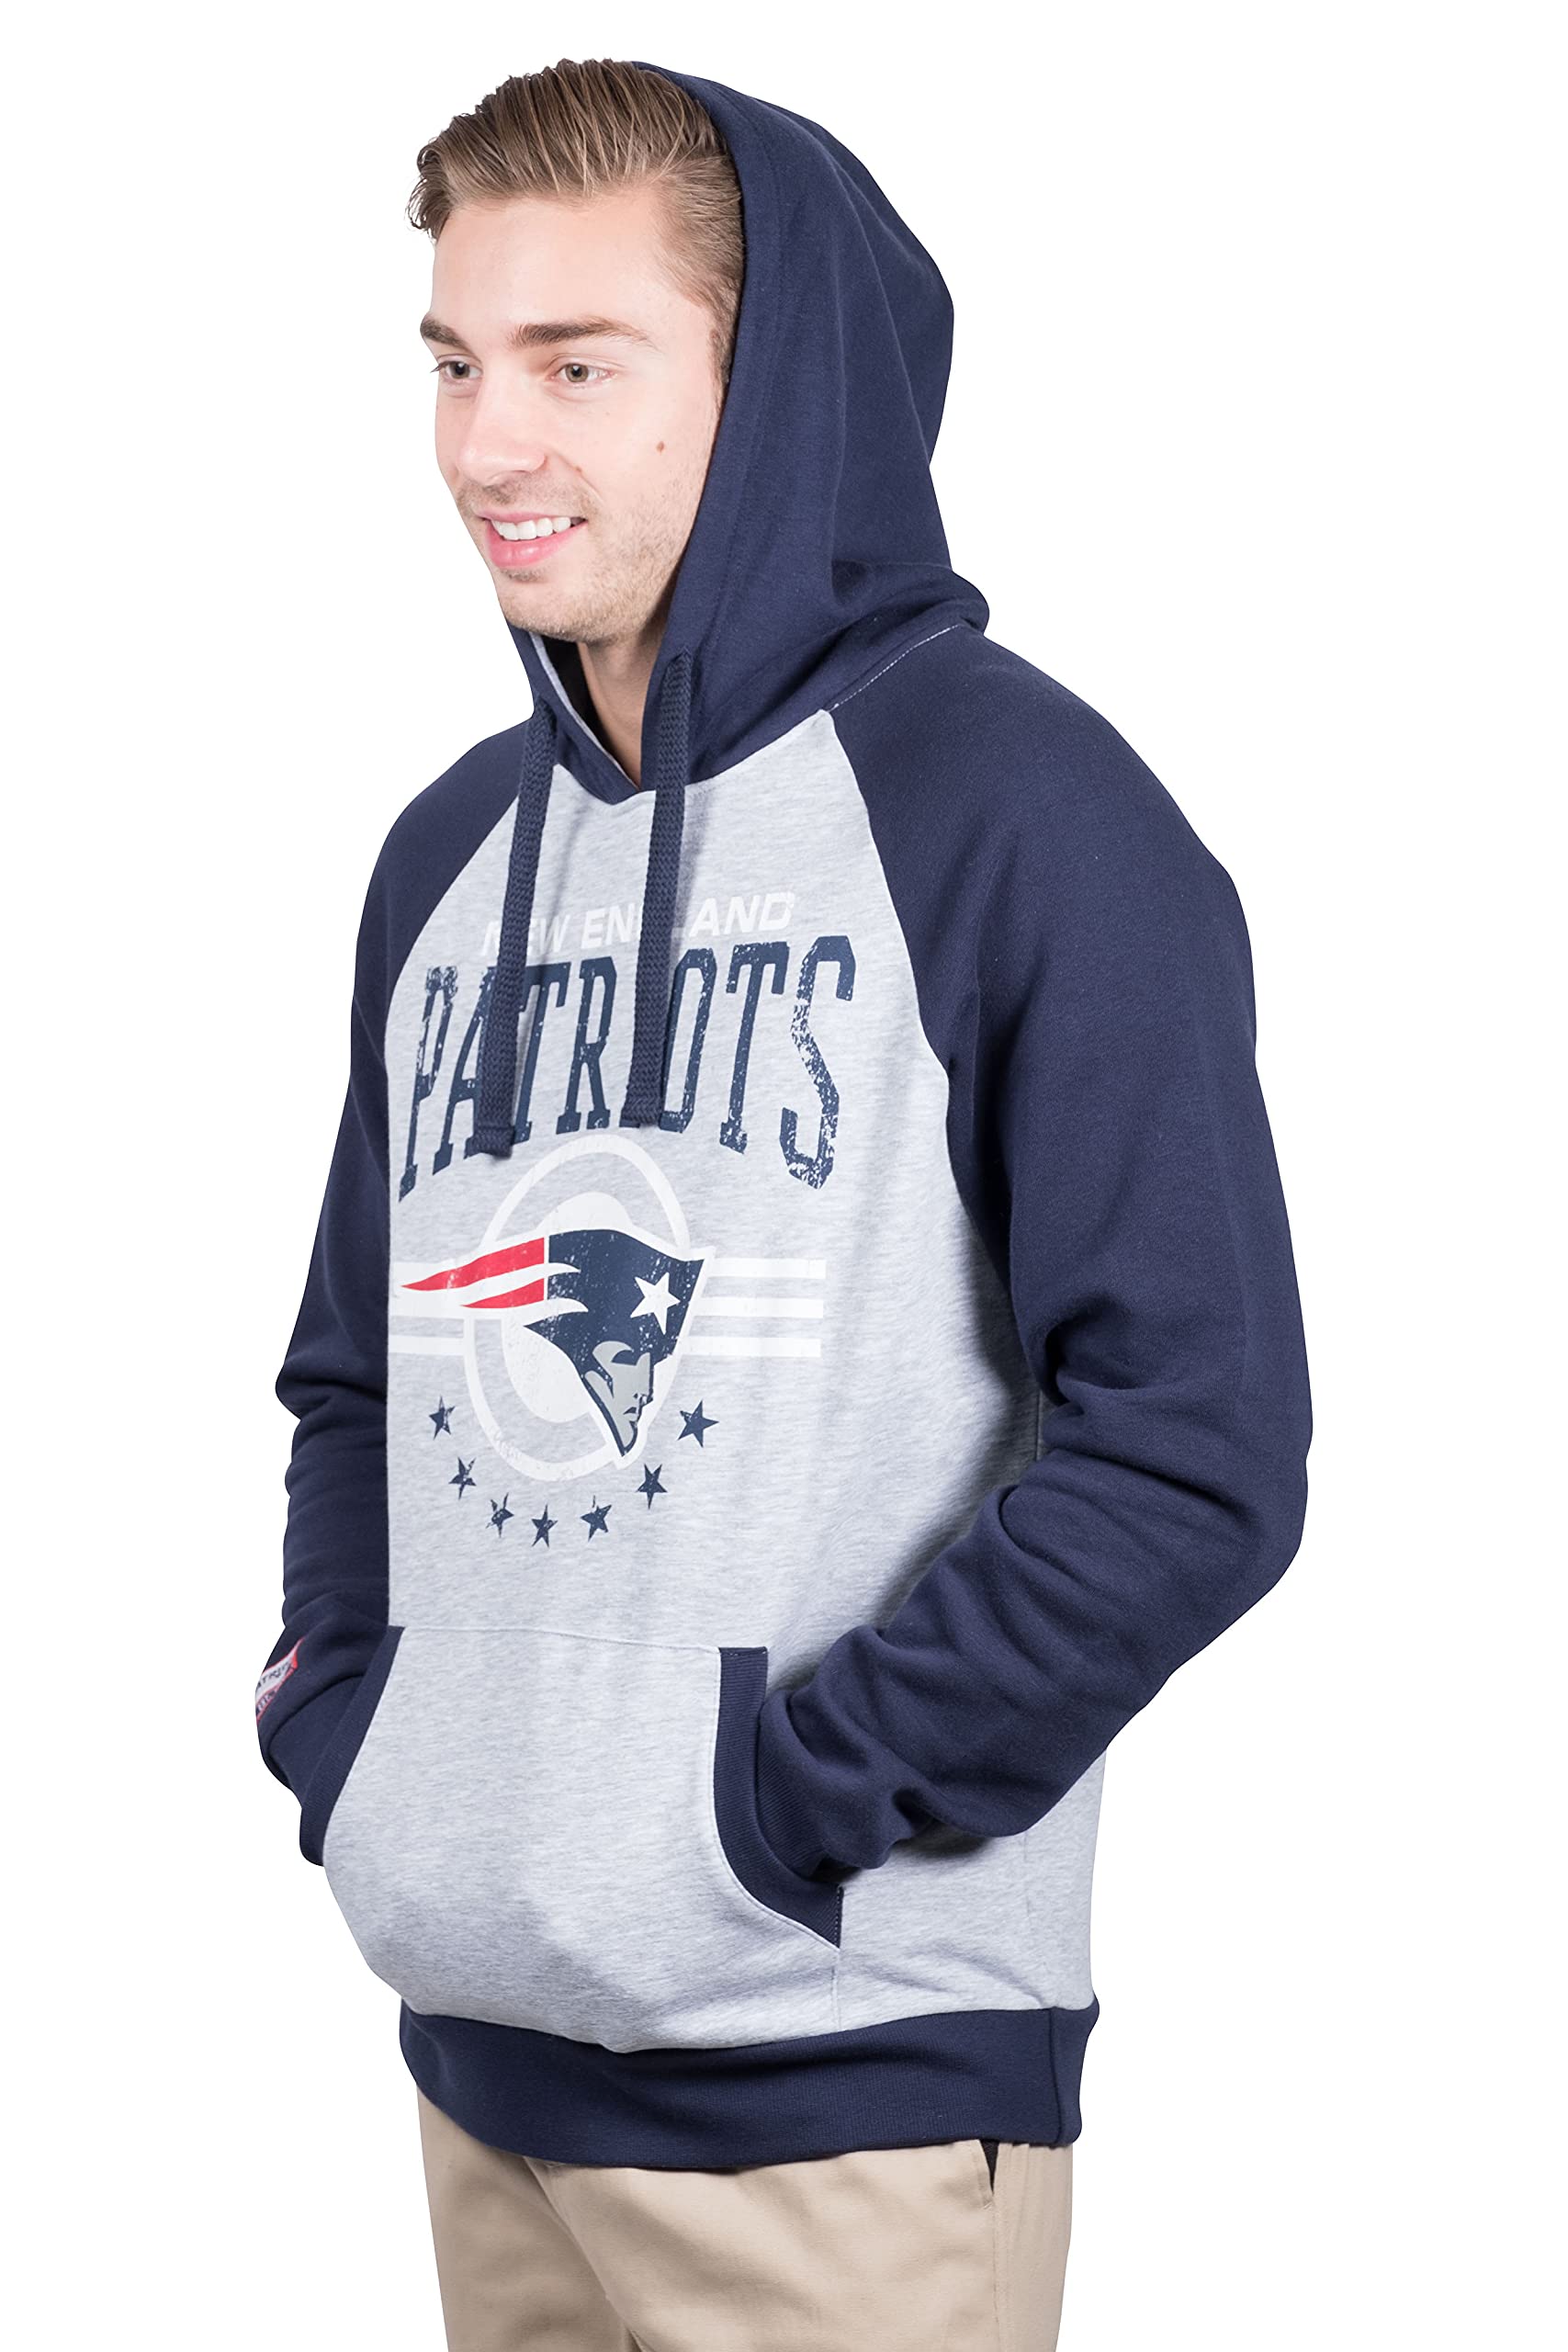 Ultra Game NFL New England Patriots Mens Soft Fleece Hoodie Pullover Sweatshirt University|New England Patriots